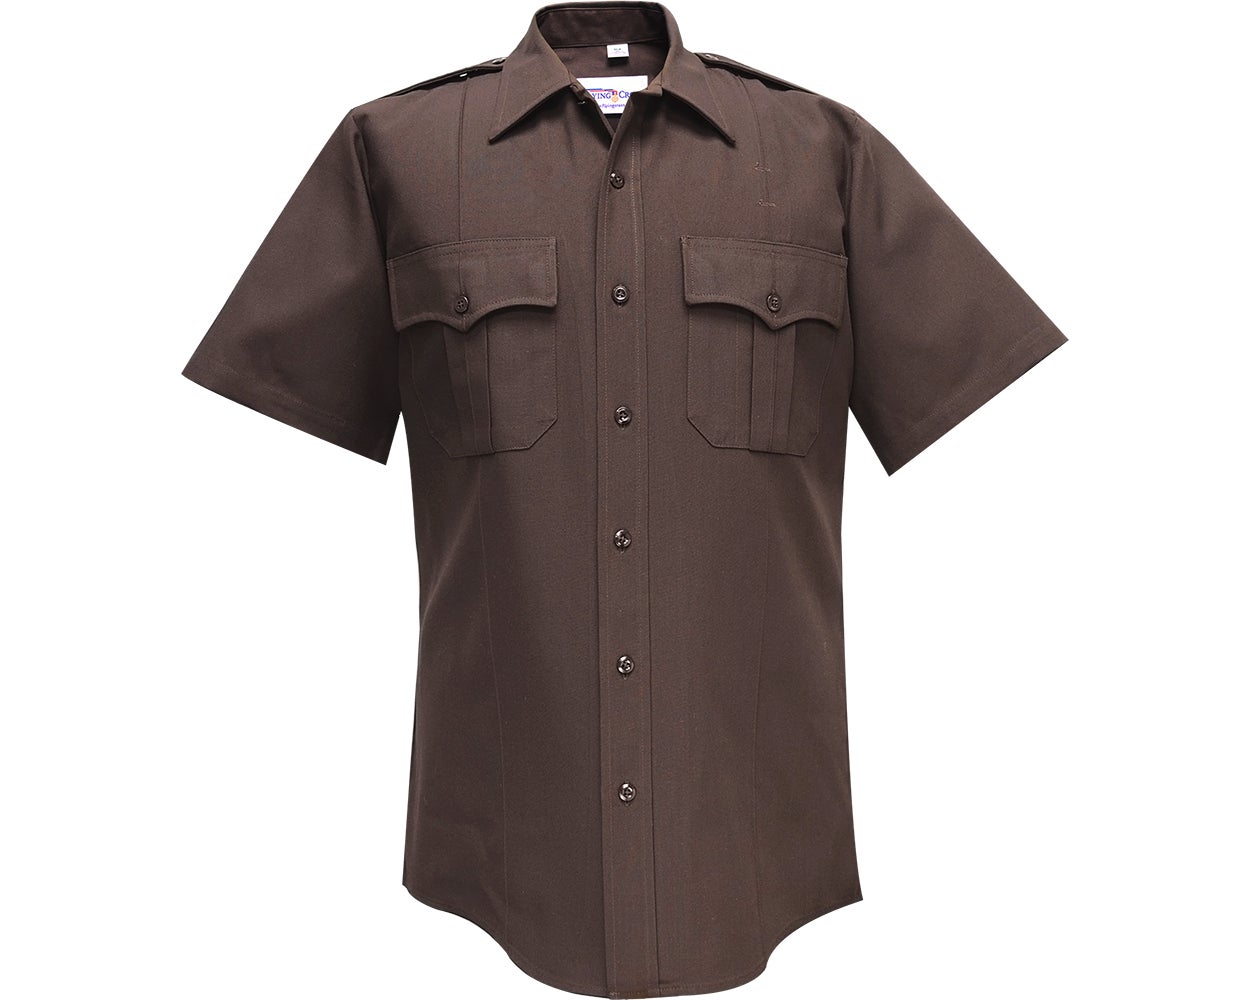 Flying Cross Command 100% Polyester Men's Short Sleeve Uniform Shirt with Zipper 85R77Z/87R78Z - Brown, 14-14.5